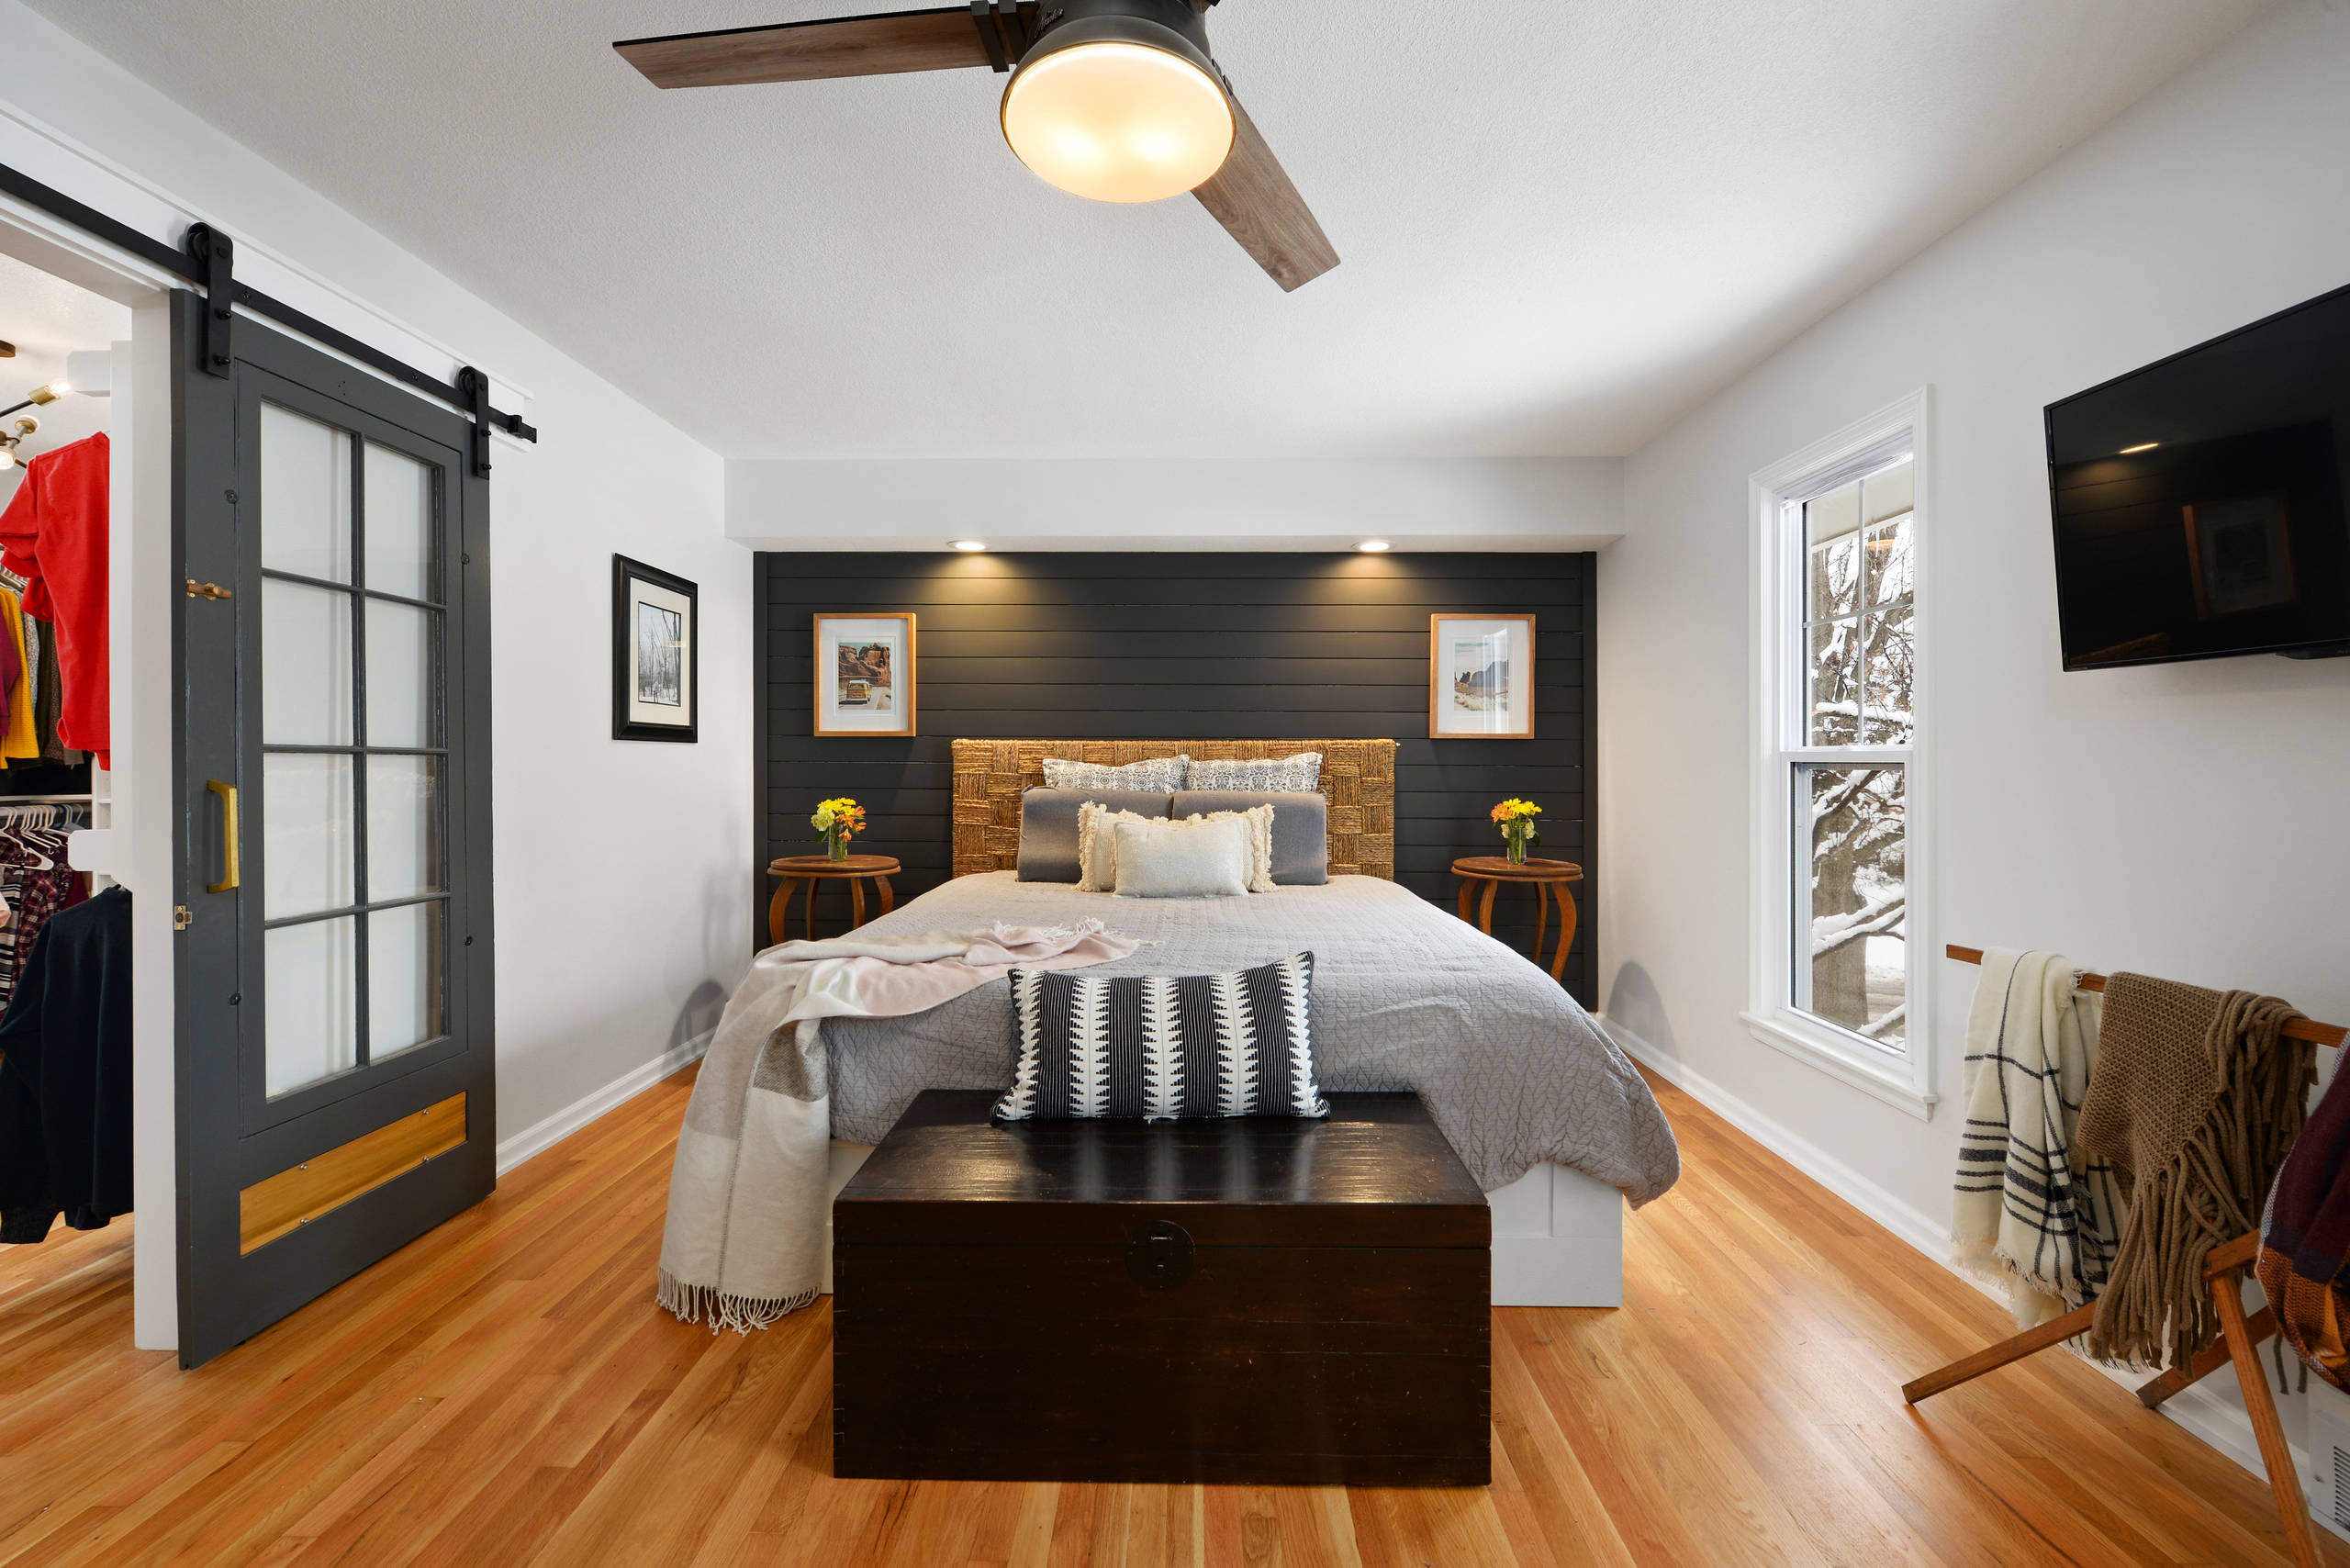 75 Beautiful Medium Tone Wood Floor Bedroom Pictures Ideas July 2021 Houzz